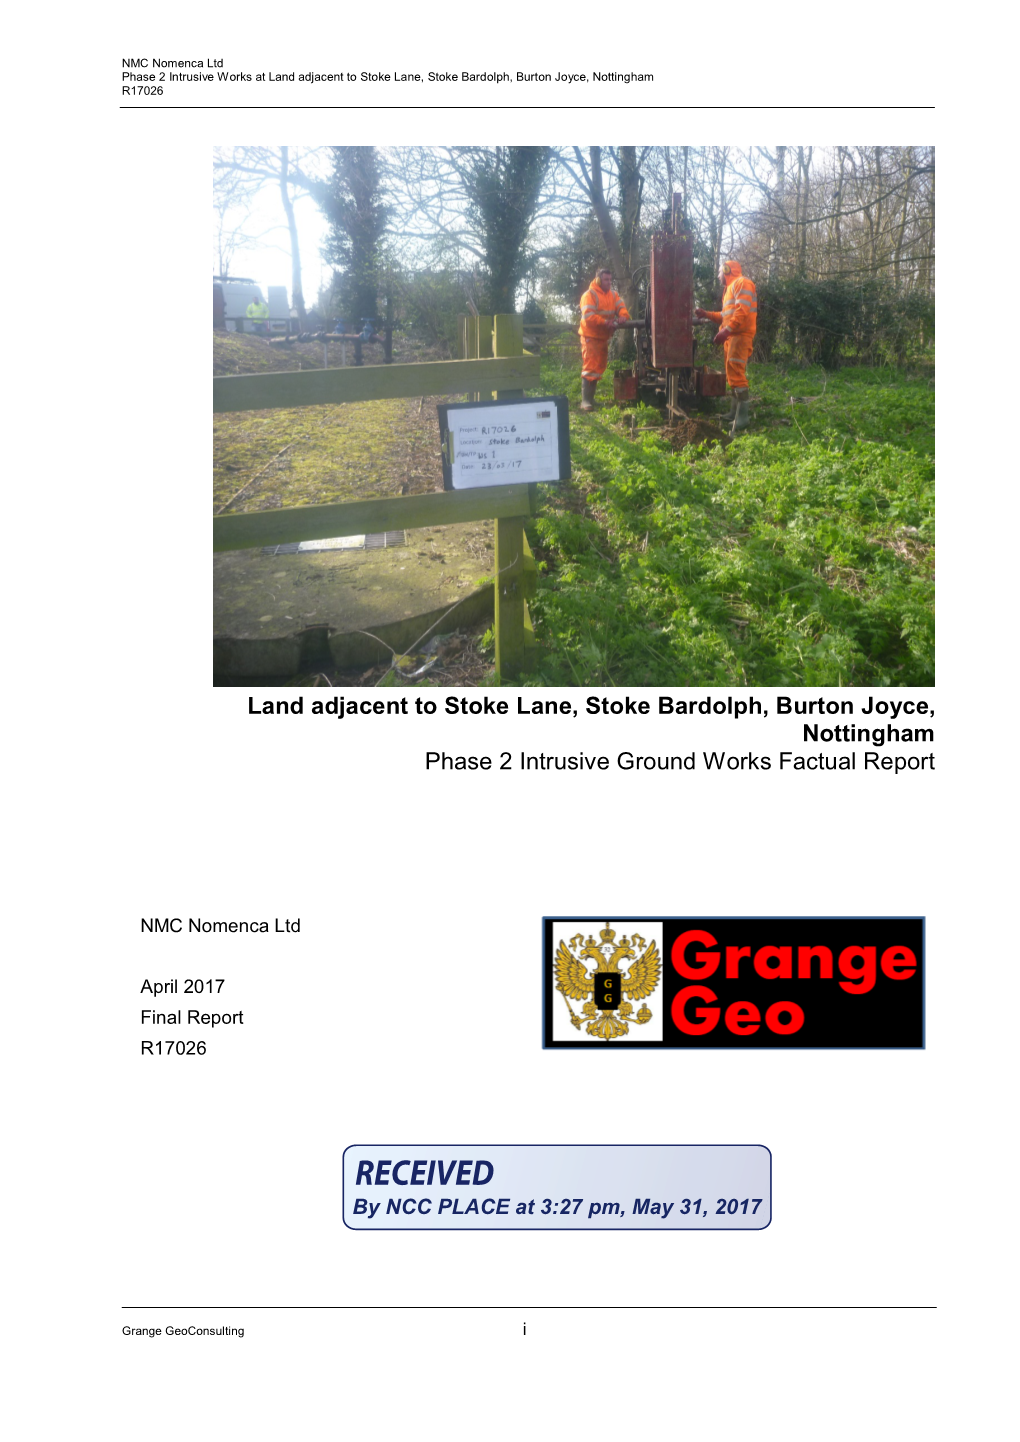 Land Adjacent to Stoke Lane, Stoke Bardolph, Burton Joyce, Nottingham R17026